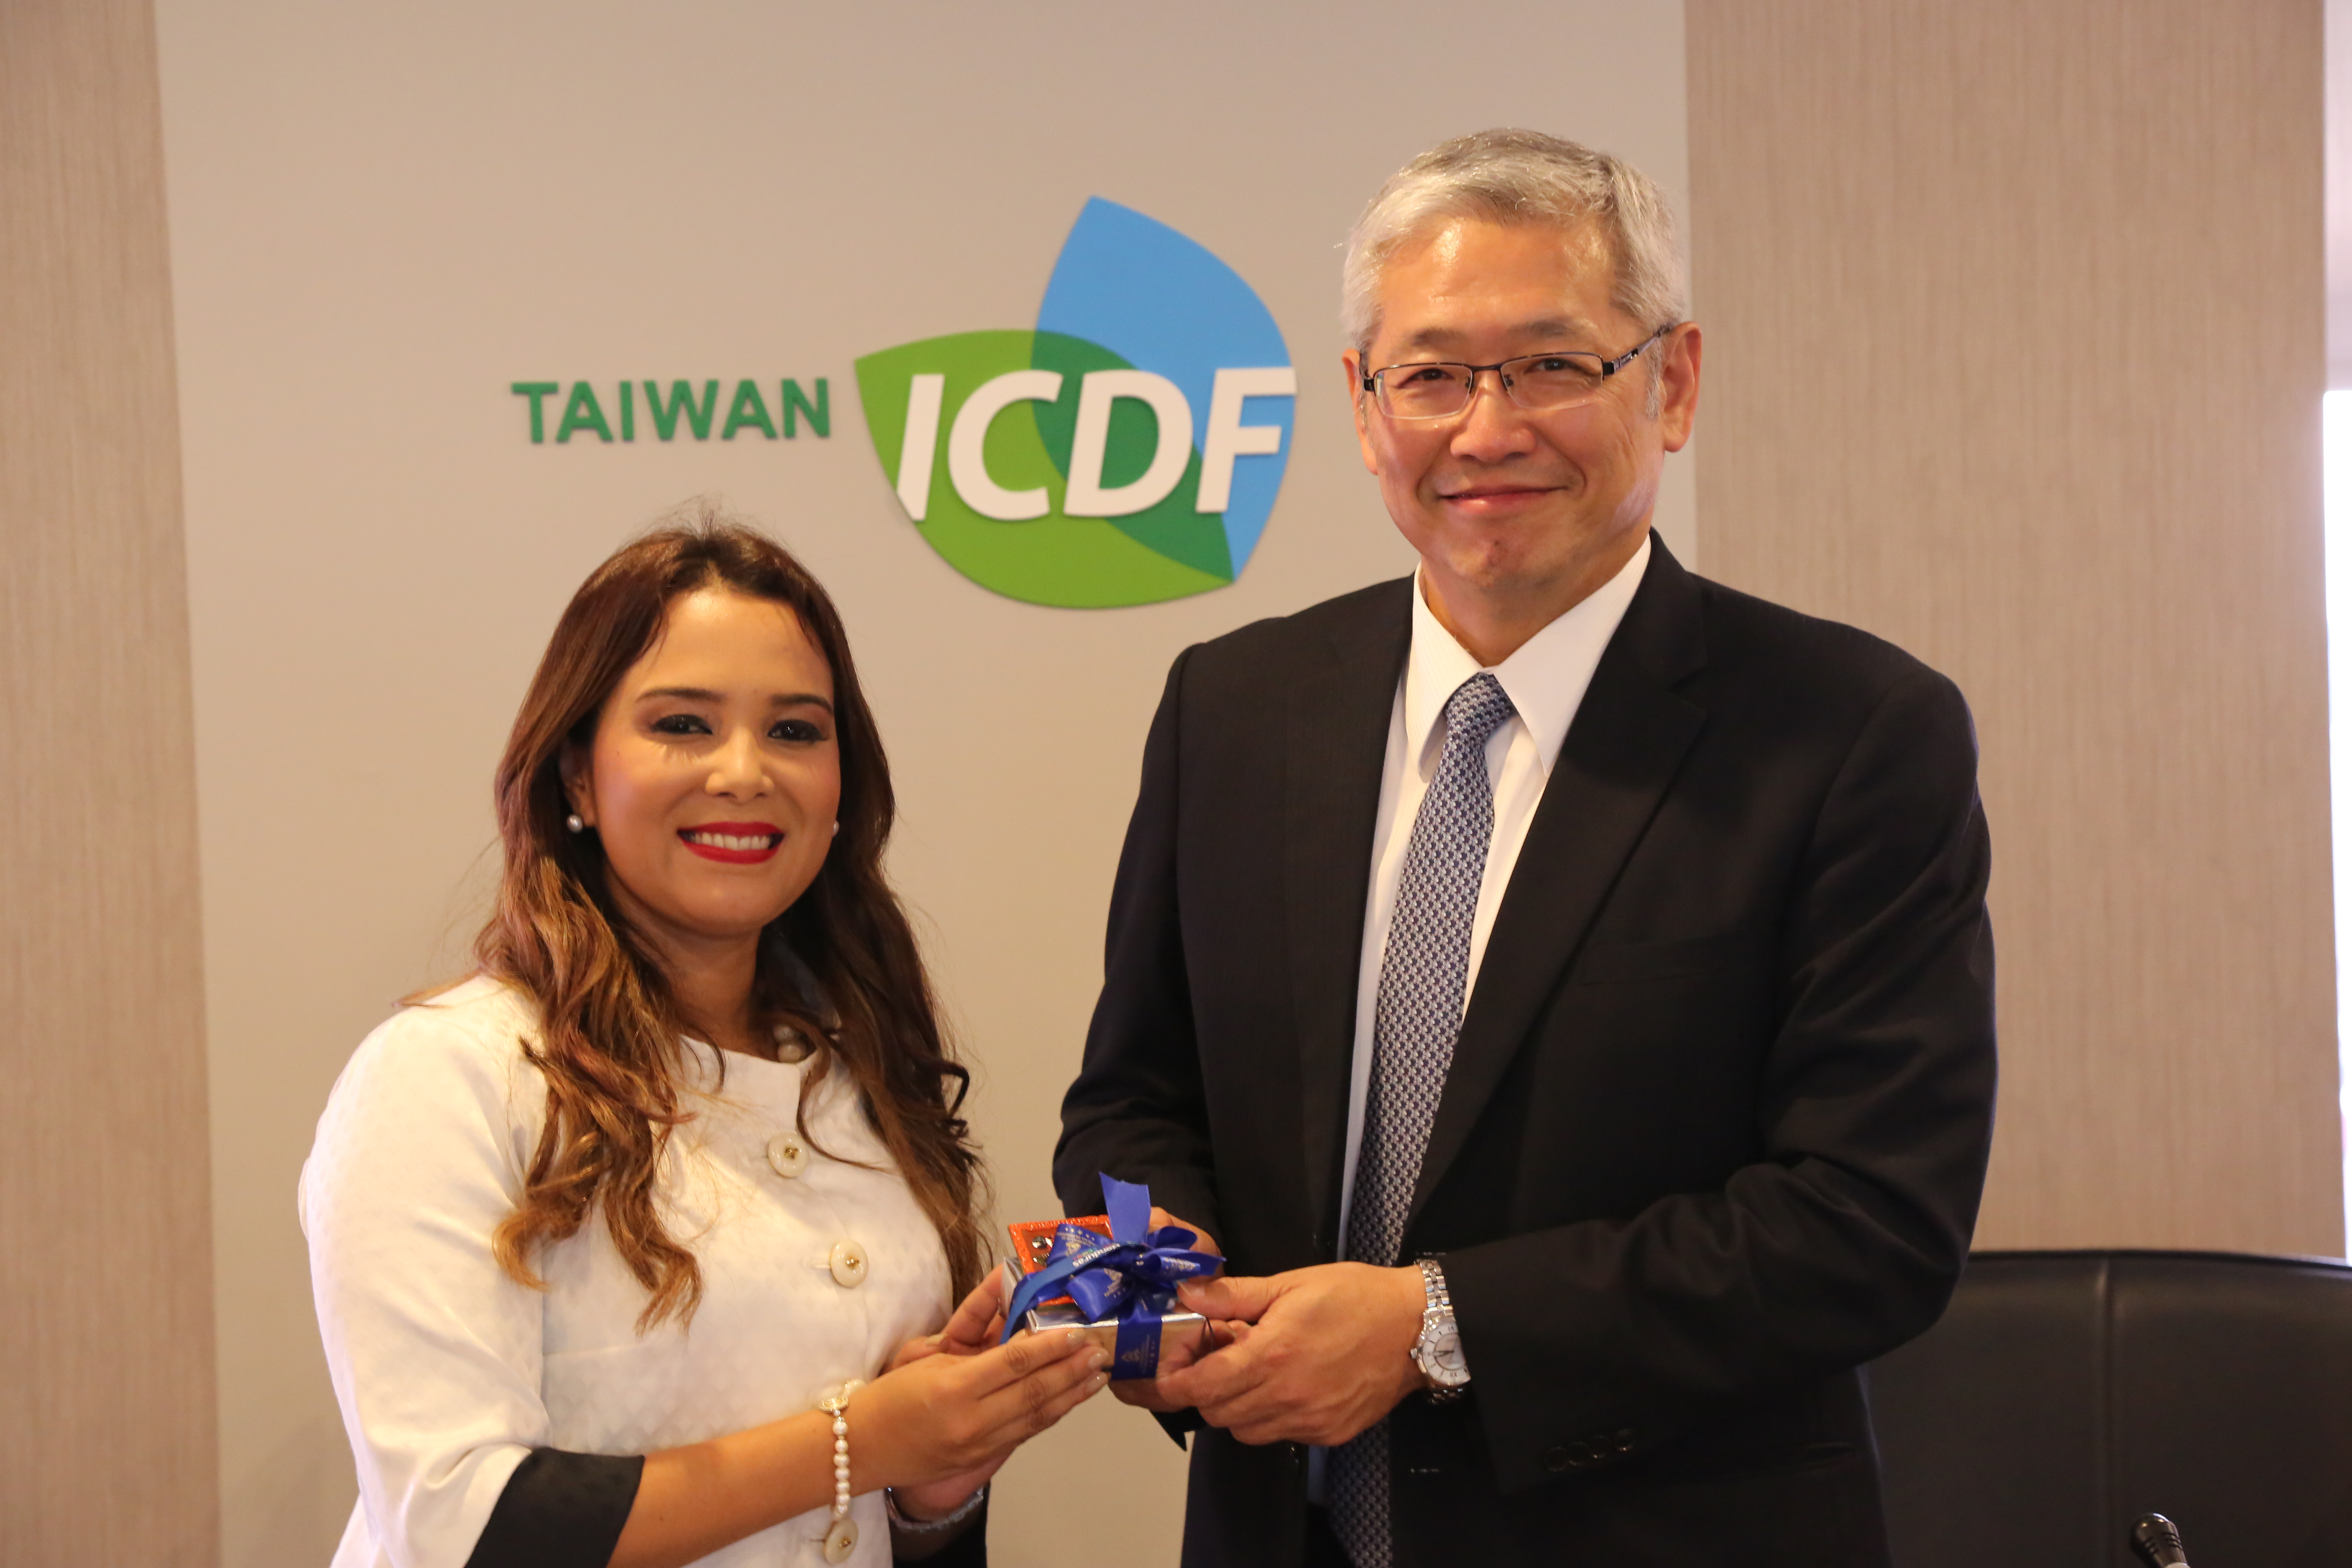 Vice President of Honduras Visits the TaiwanICDF